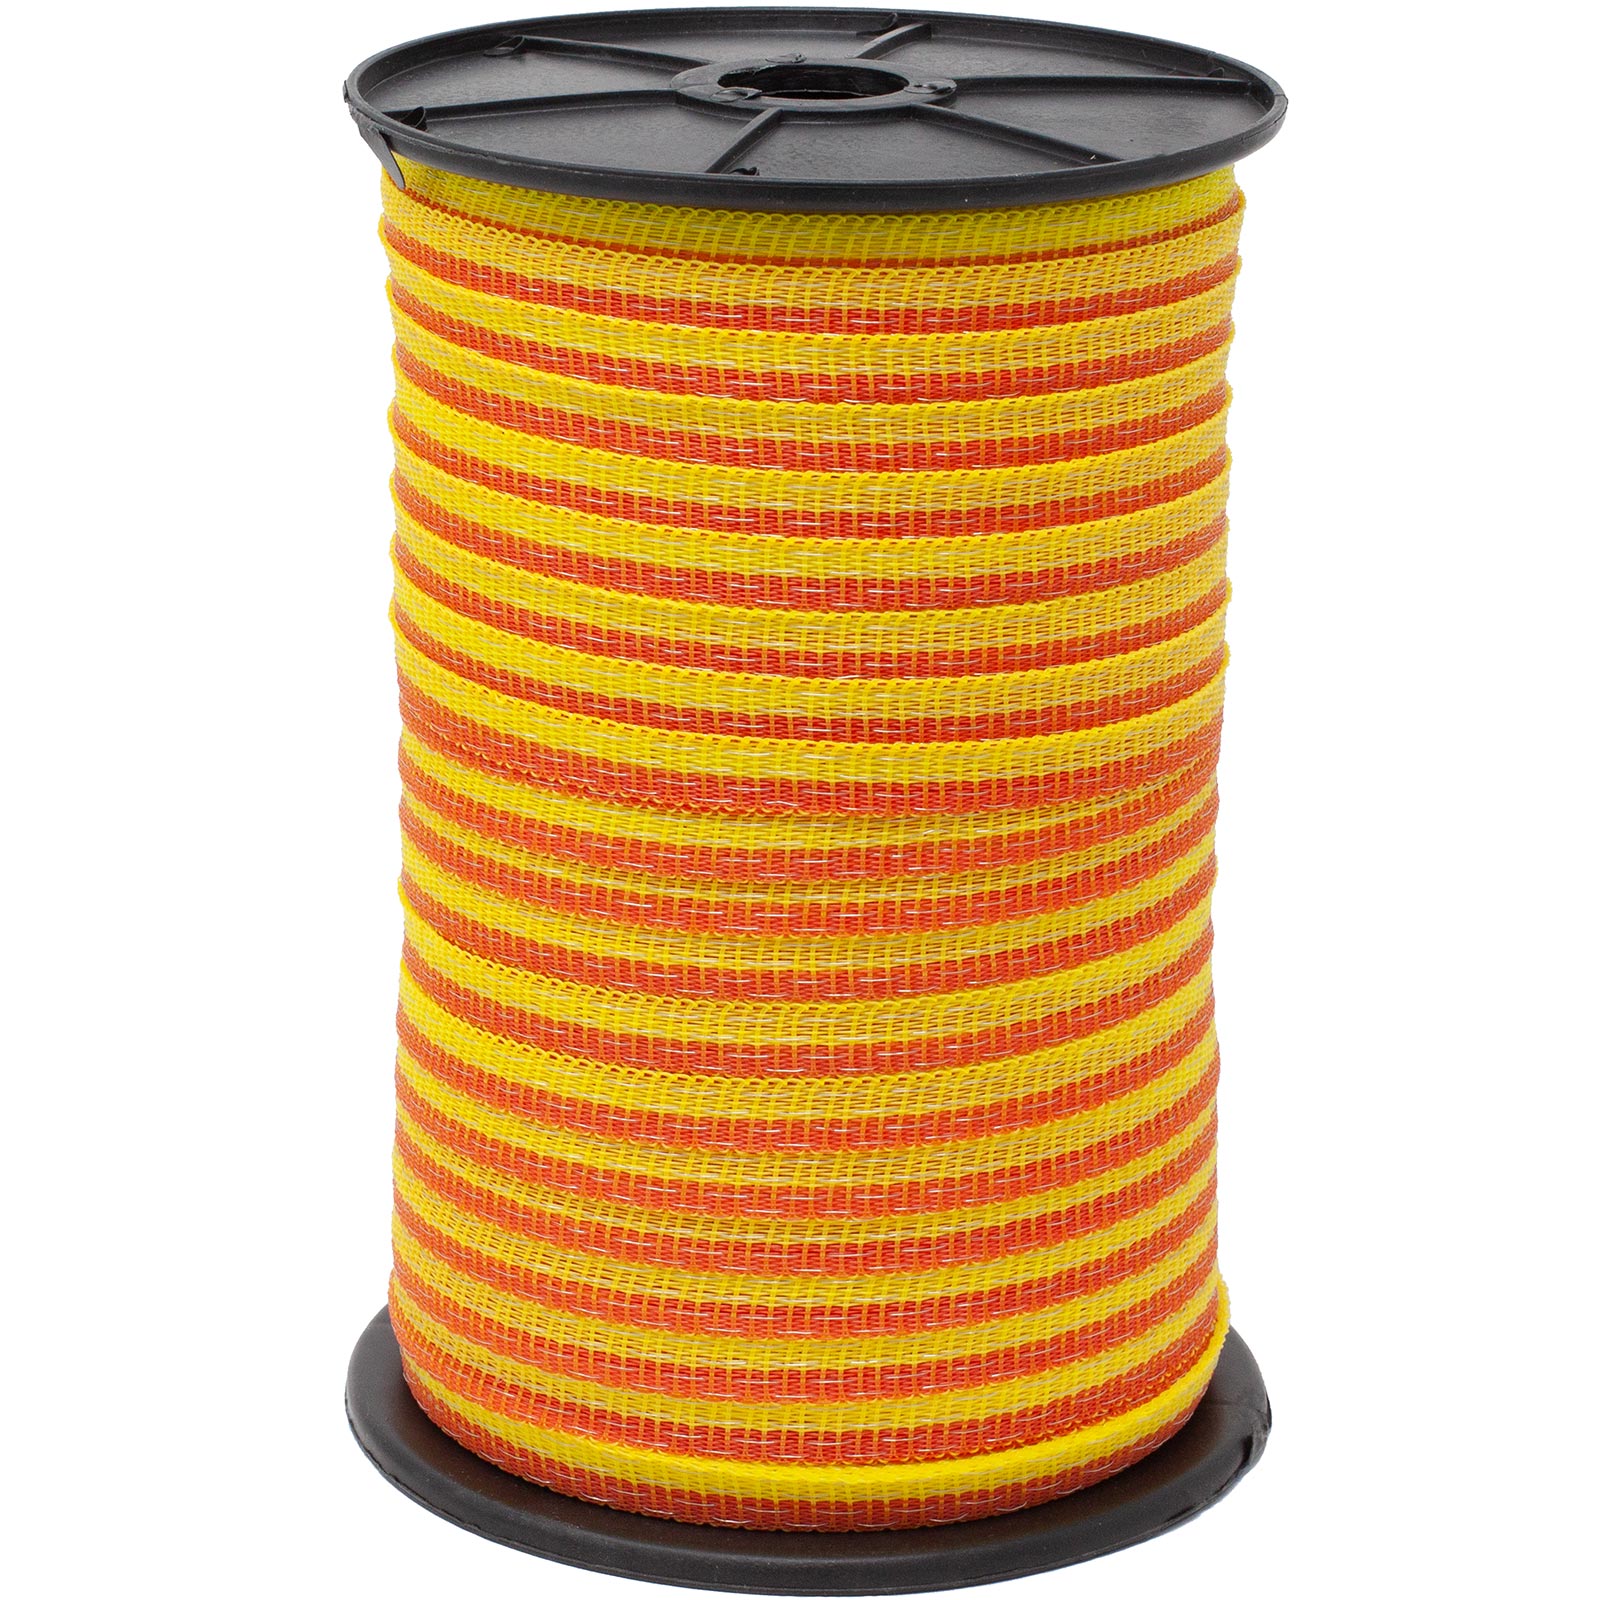 Agrarzone Nastro per recinto elettrico BASIC 10 mm, 4x0,16 acciaio inox, giallo-arancio